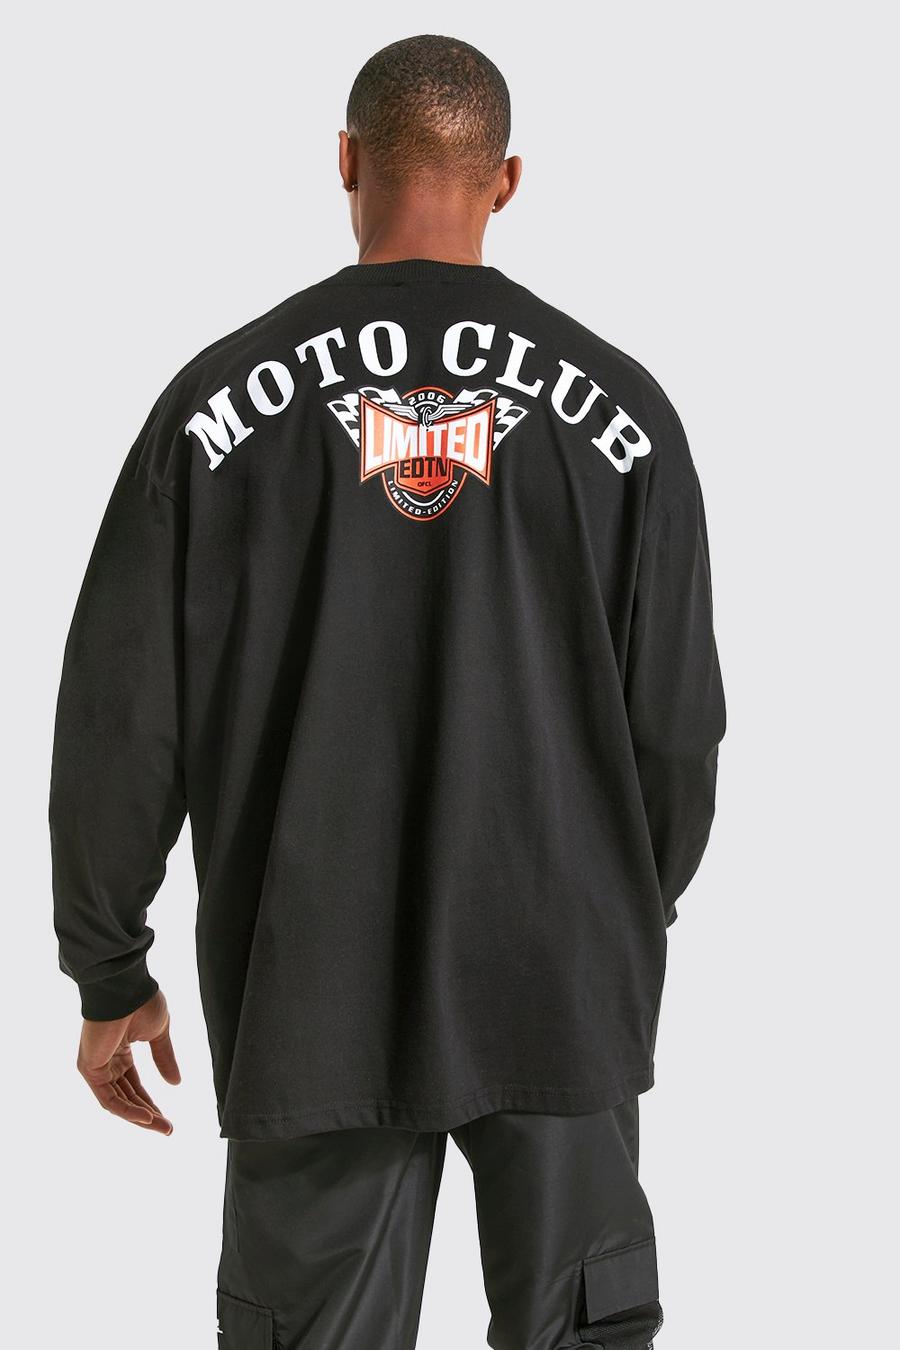 Black Oversized Moto Club Long Sleeve T-shirt